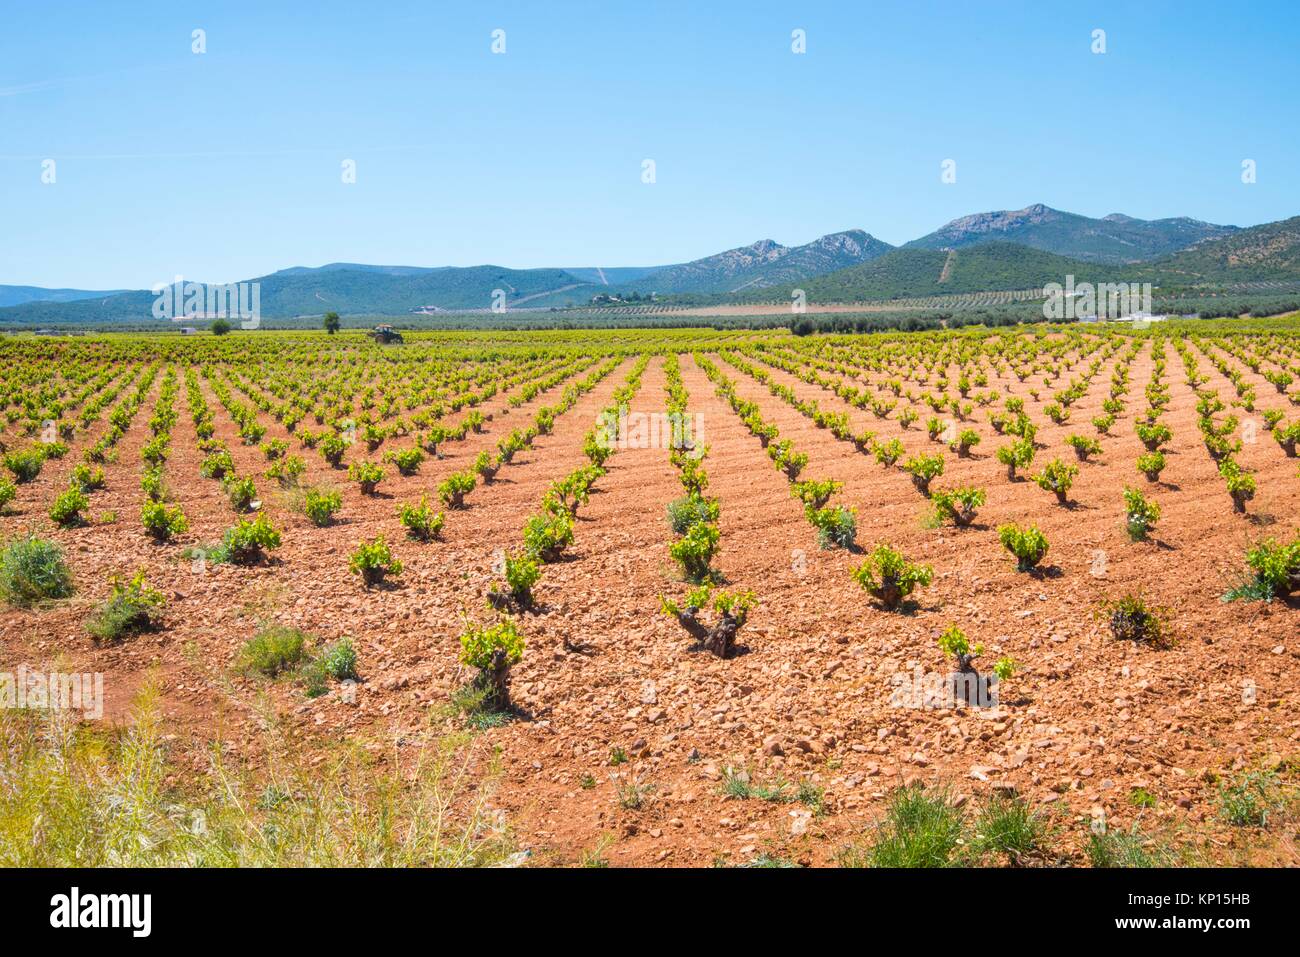 Vignoble et oliveraie. Fuente el Fresno, Ciudad Real province, Castilla La Mancha, Espagne. Banque D'Images